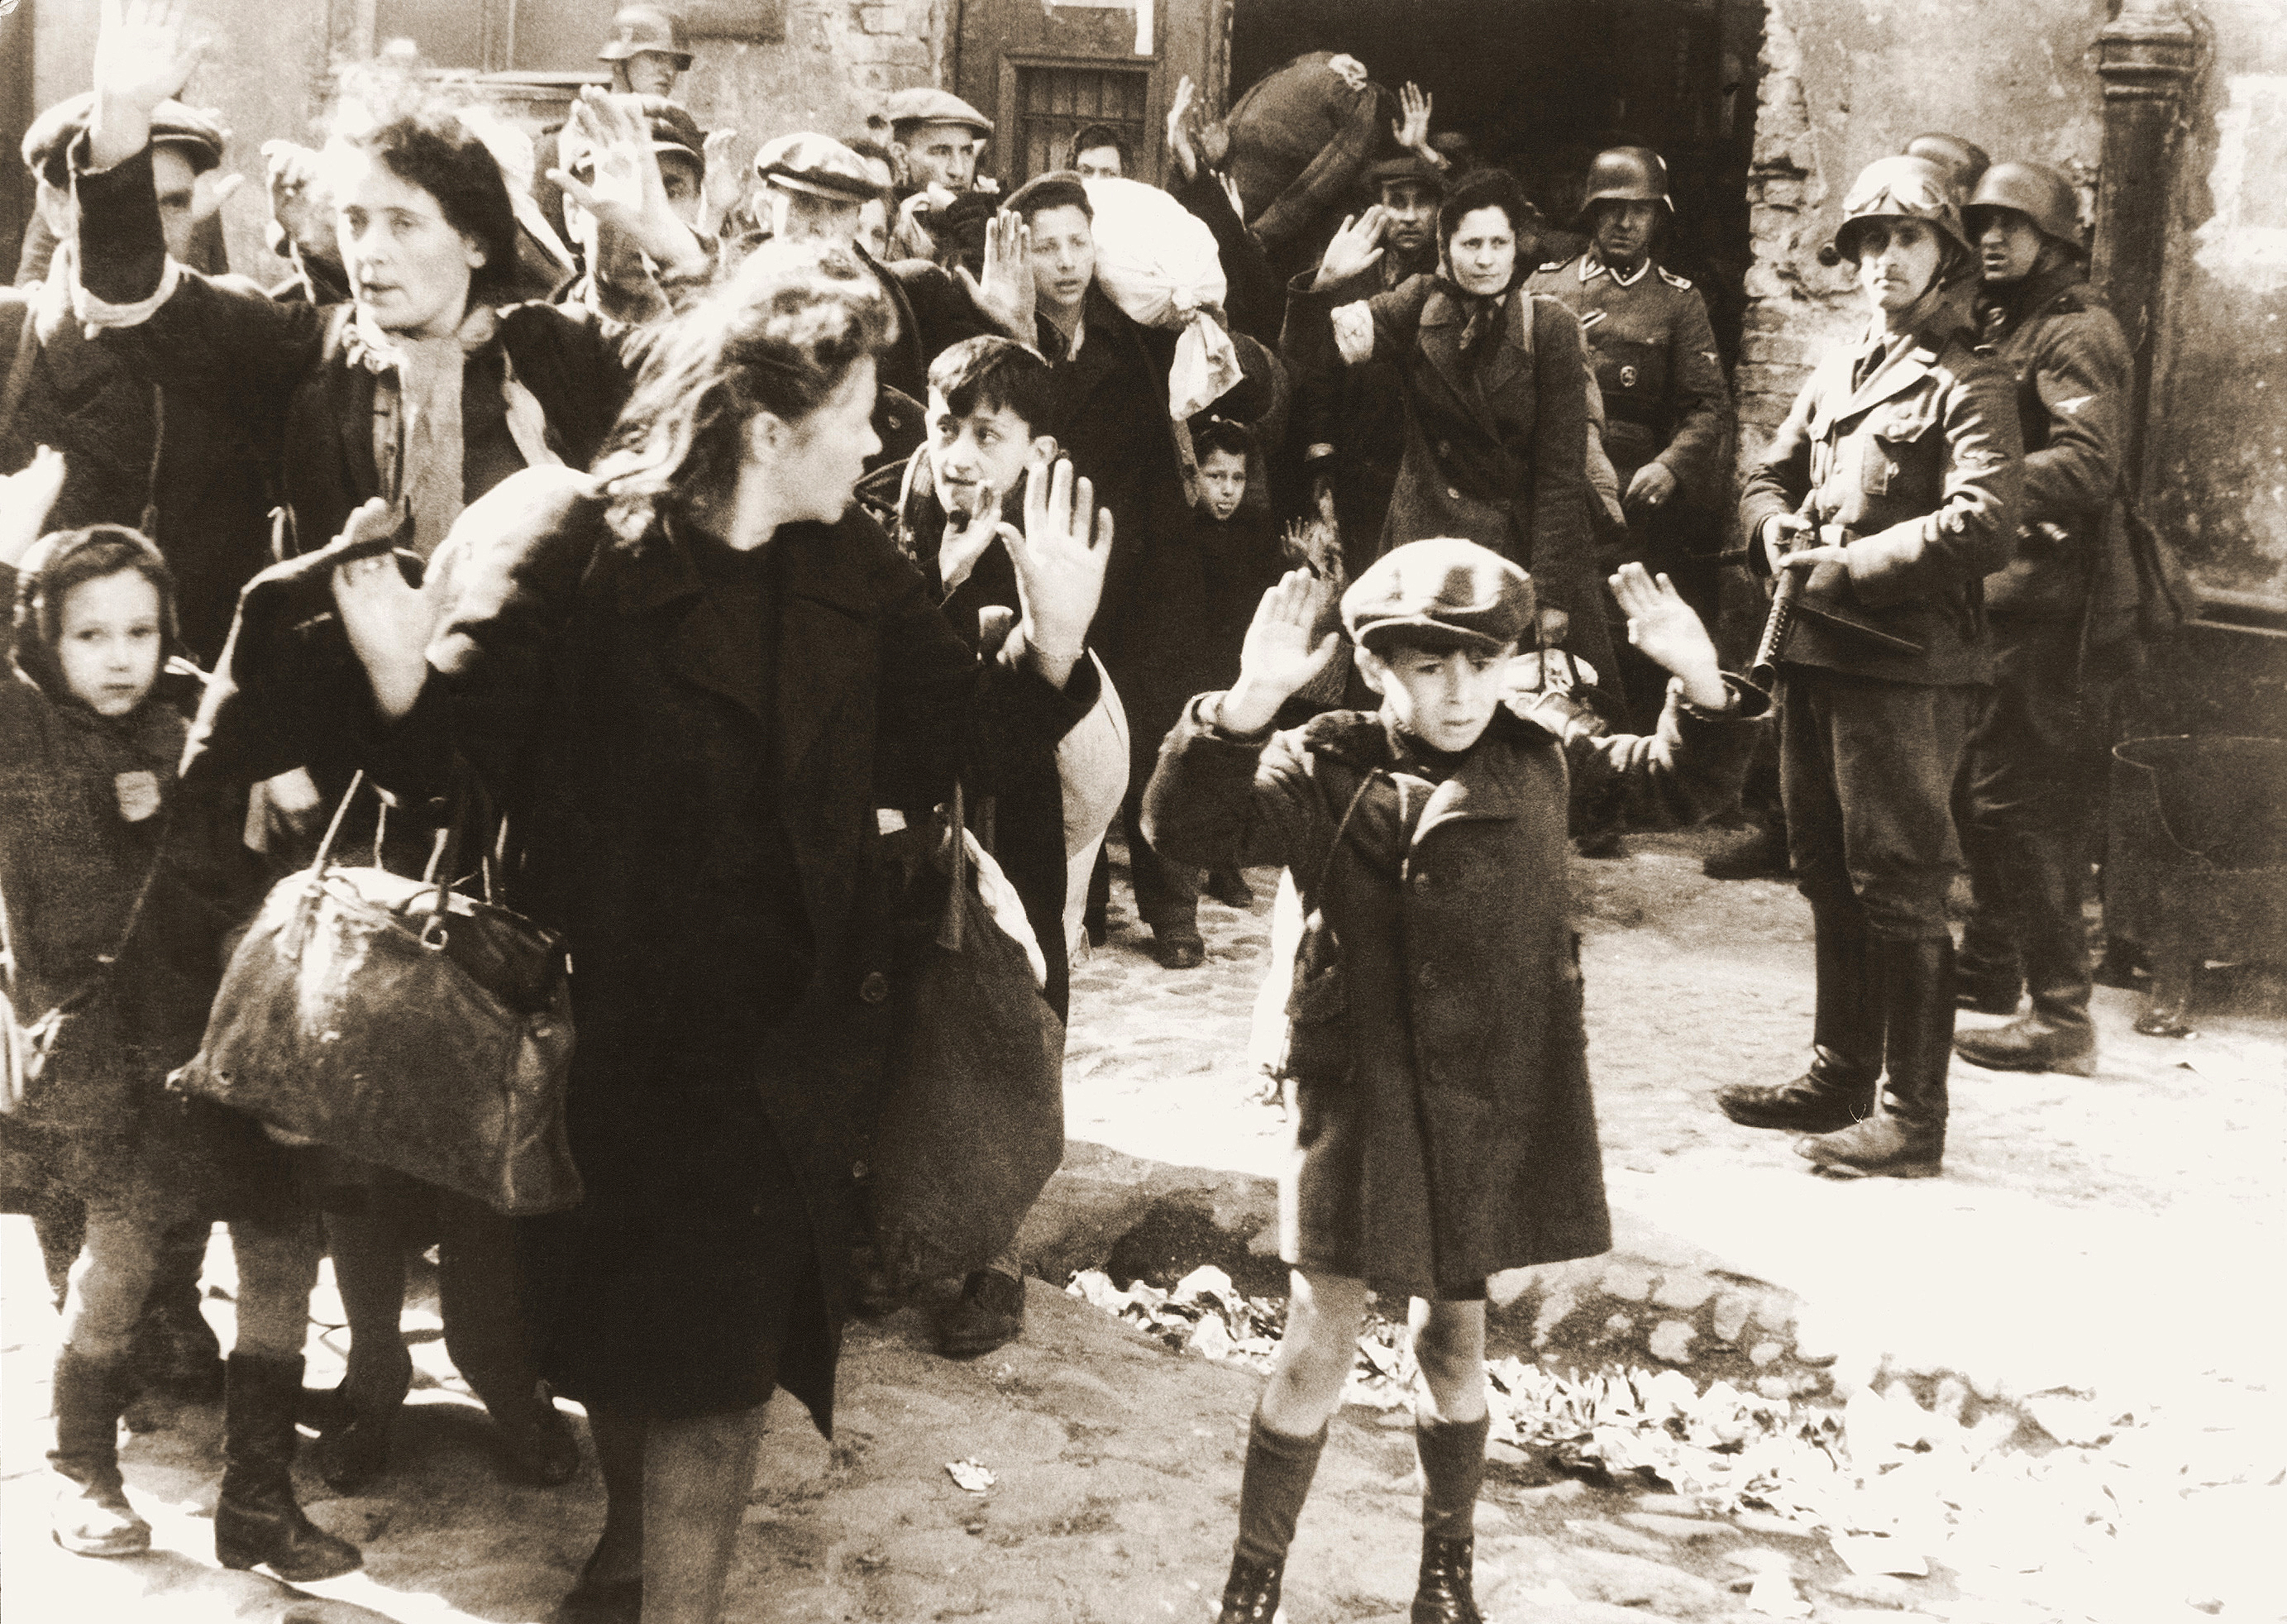 1941: Nazis Murder 9,000 Jews in One Day